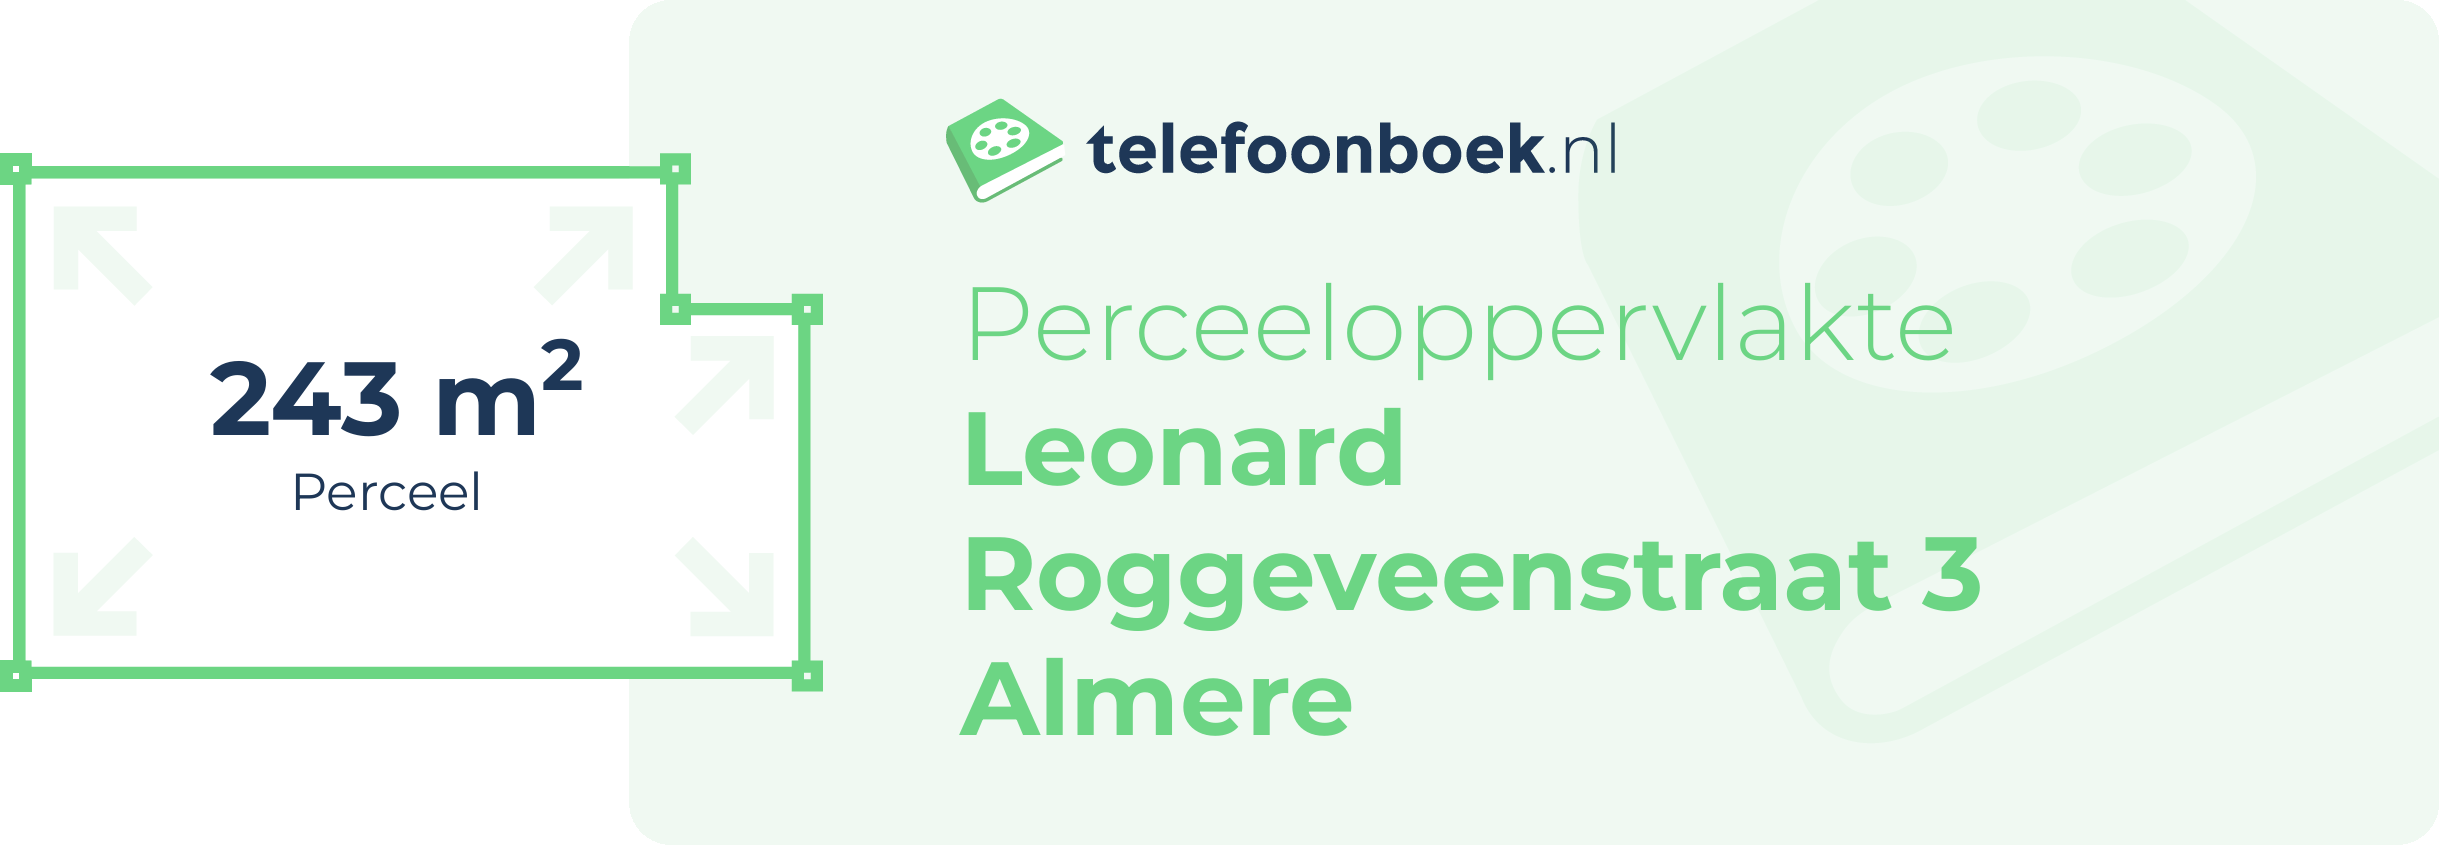 Perceeloppervlakte Leonard Roggeveenstraat 3 Almere